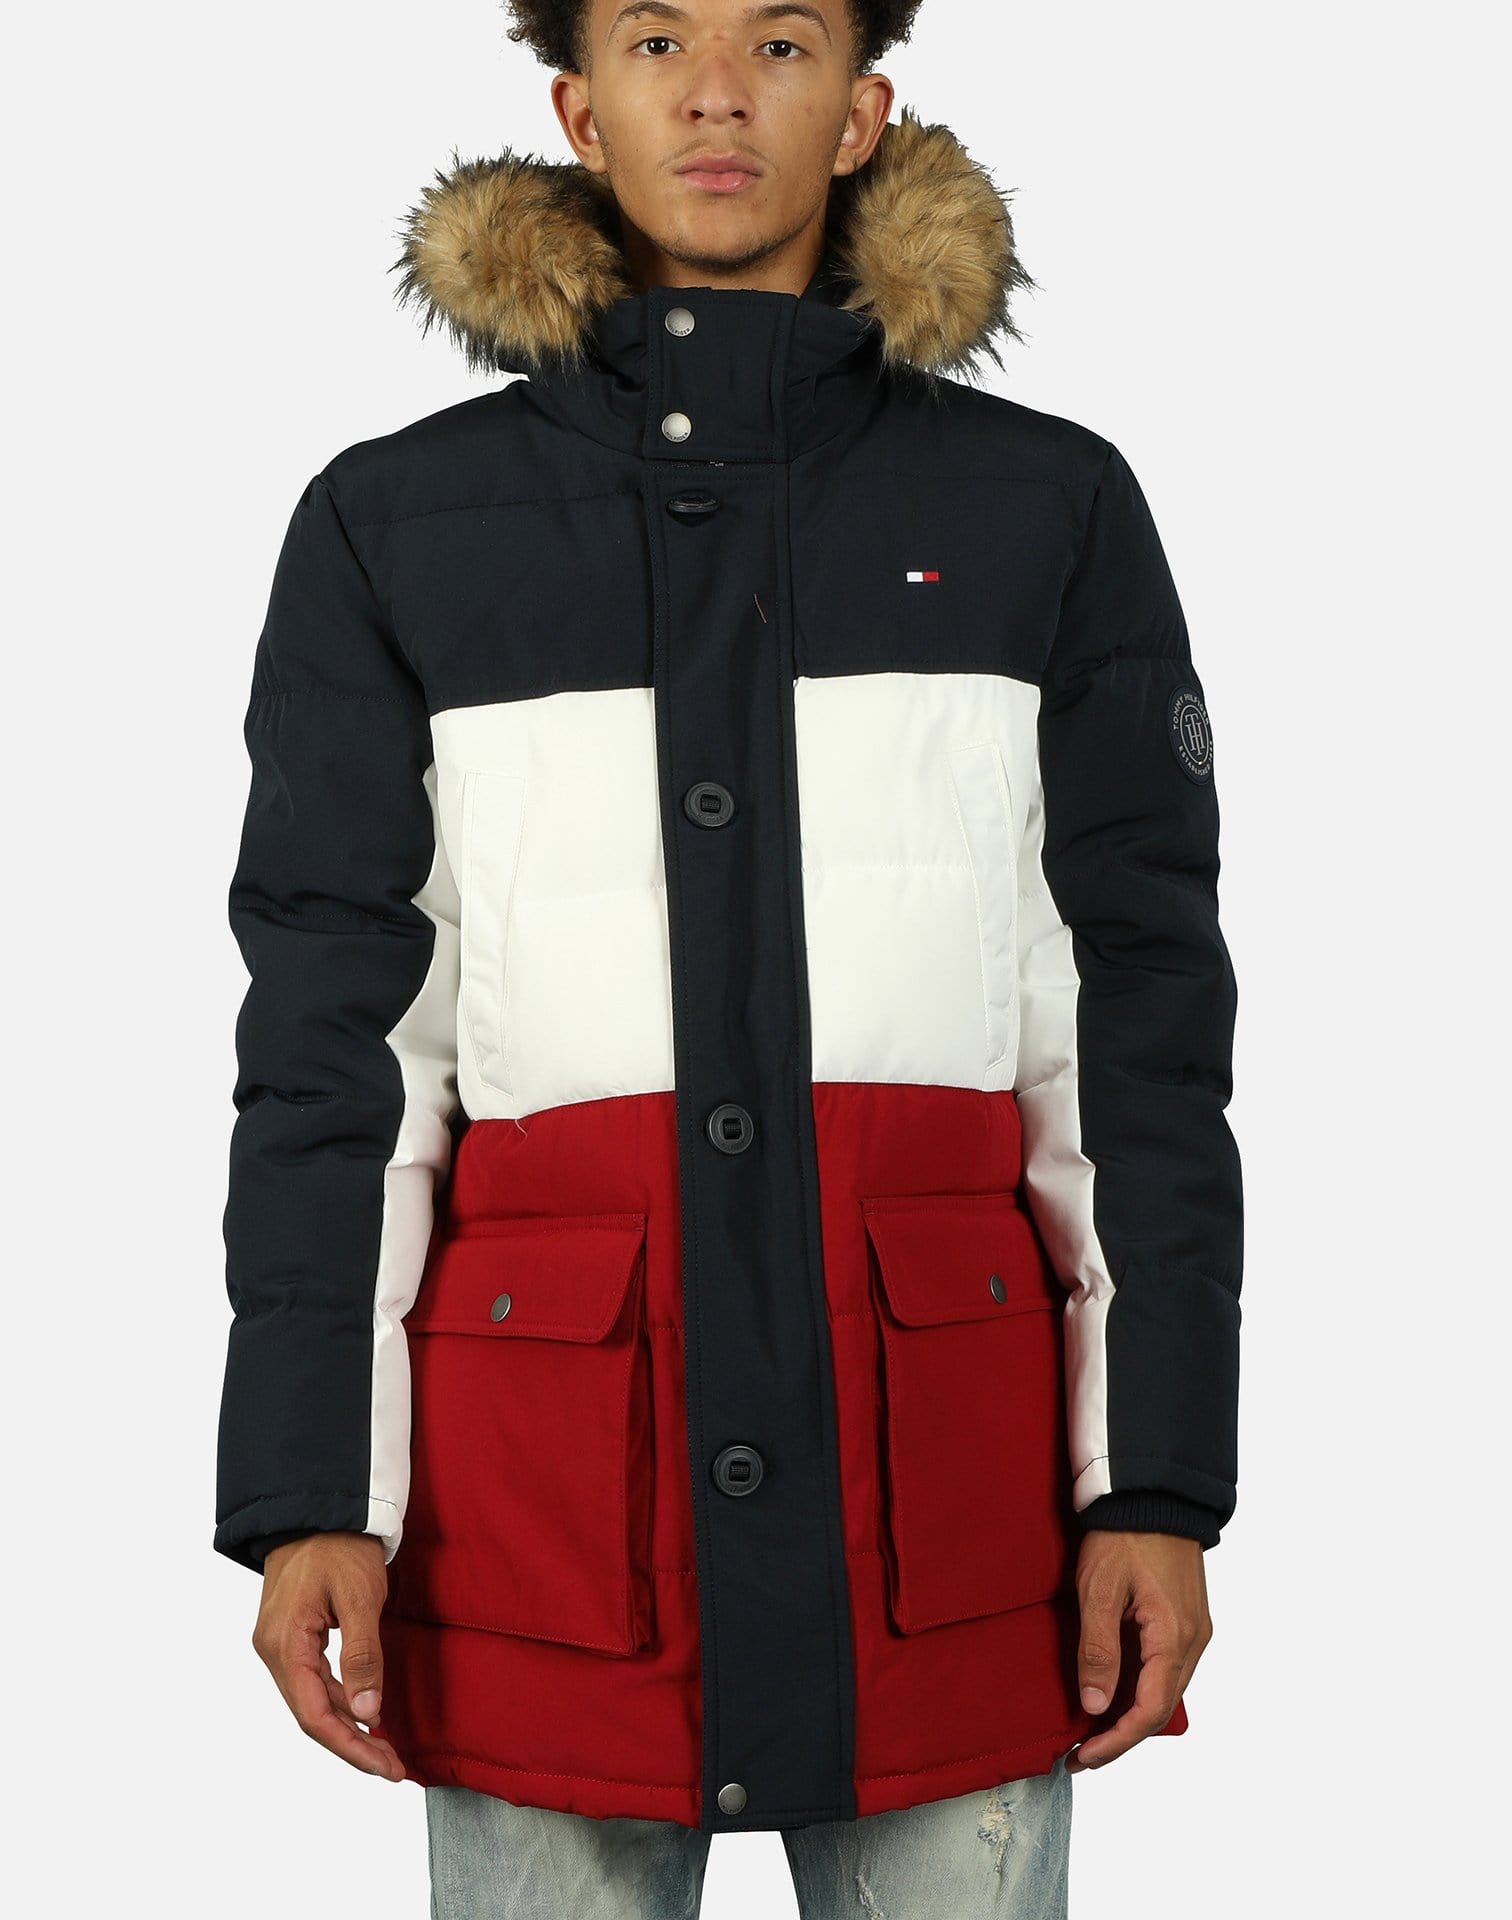 Tommy Hilfiger Men's Arctic Cloth Full Length Jacket